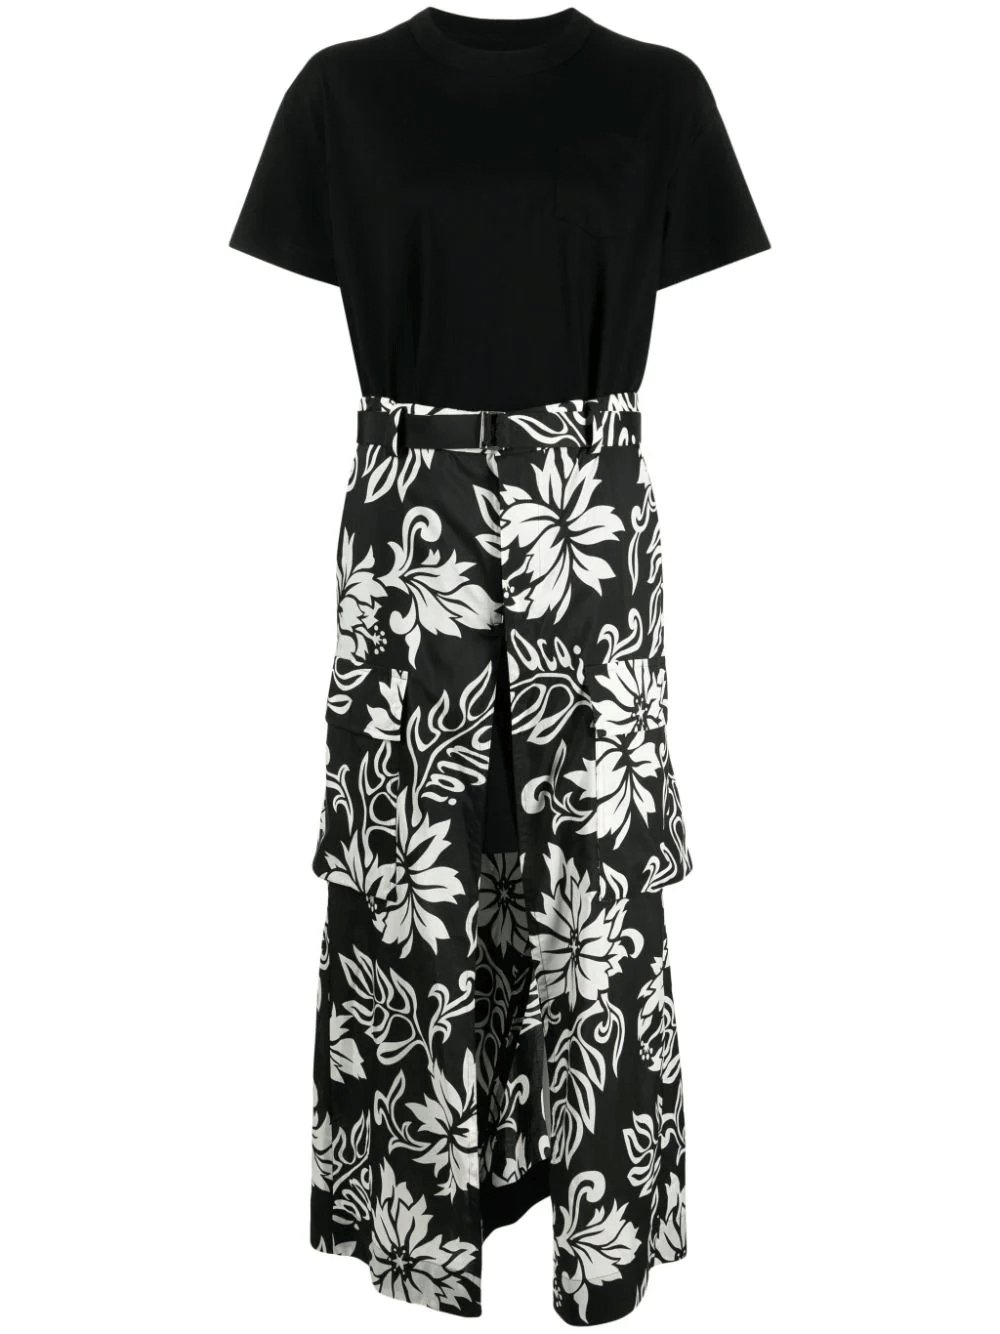 sacai-Floral-Print-Cotton-Jersey-Dress-Black-1